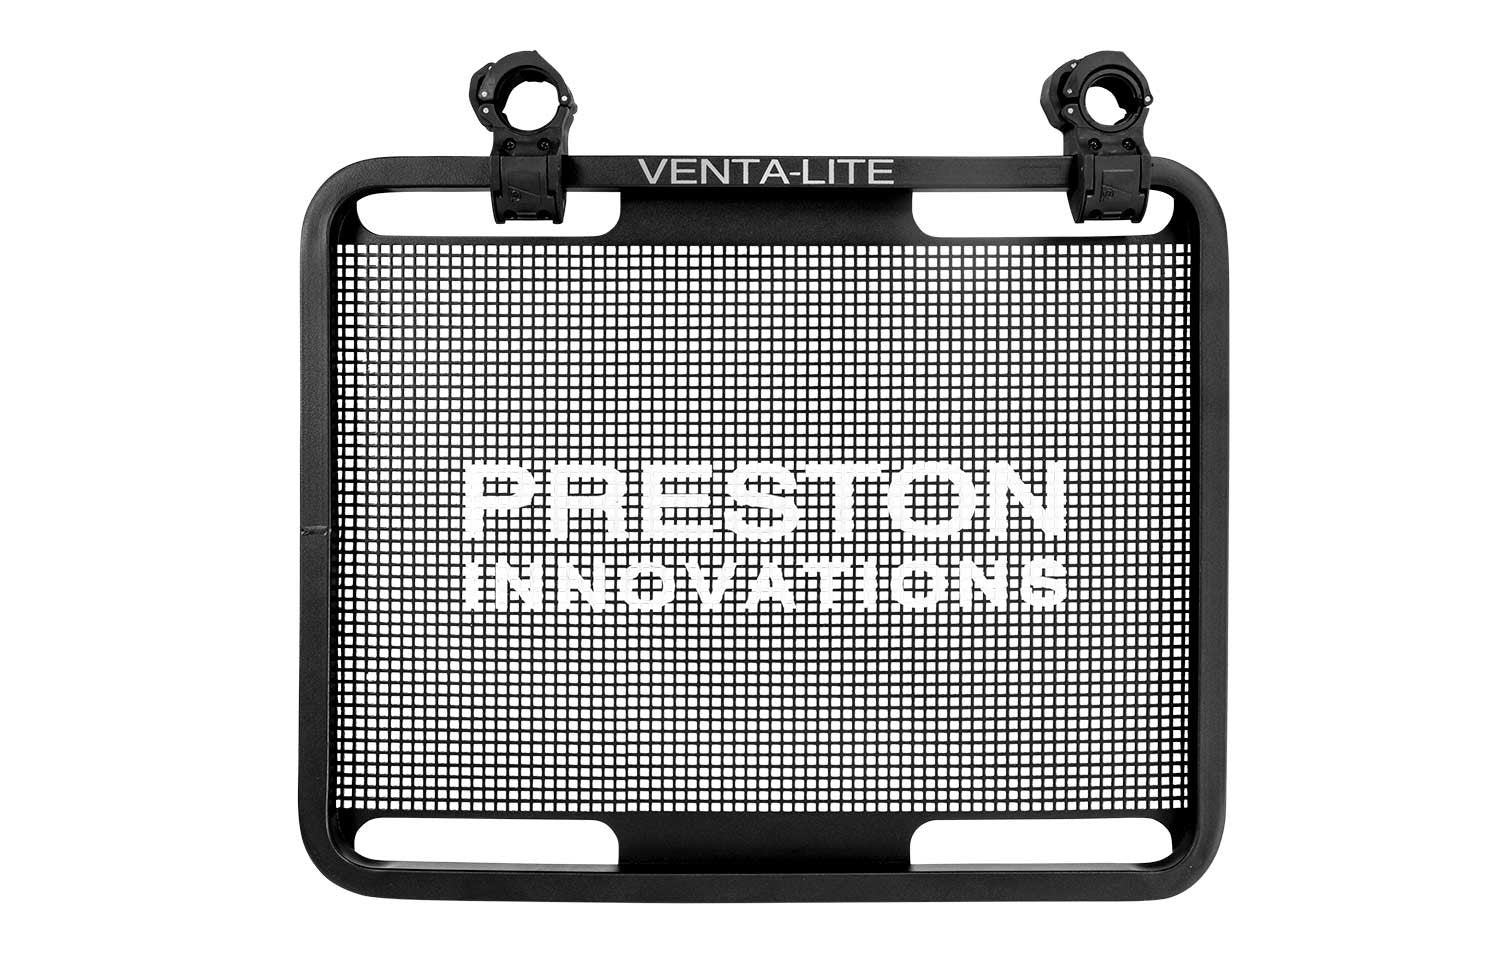 Preston Innovations Venta-Lite Side Tray Large